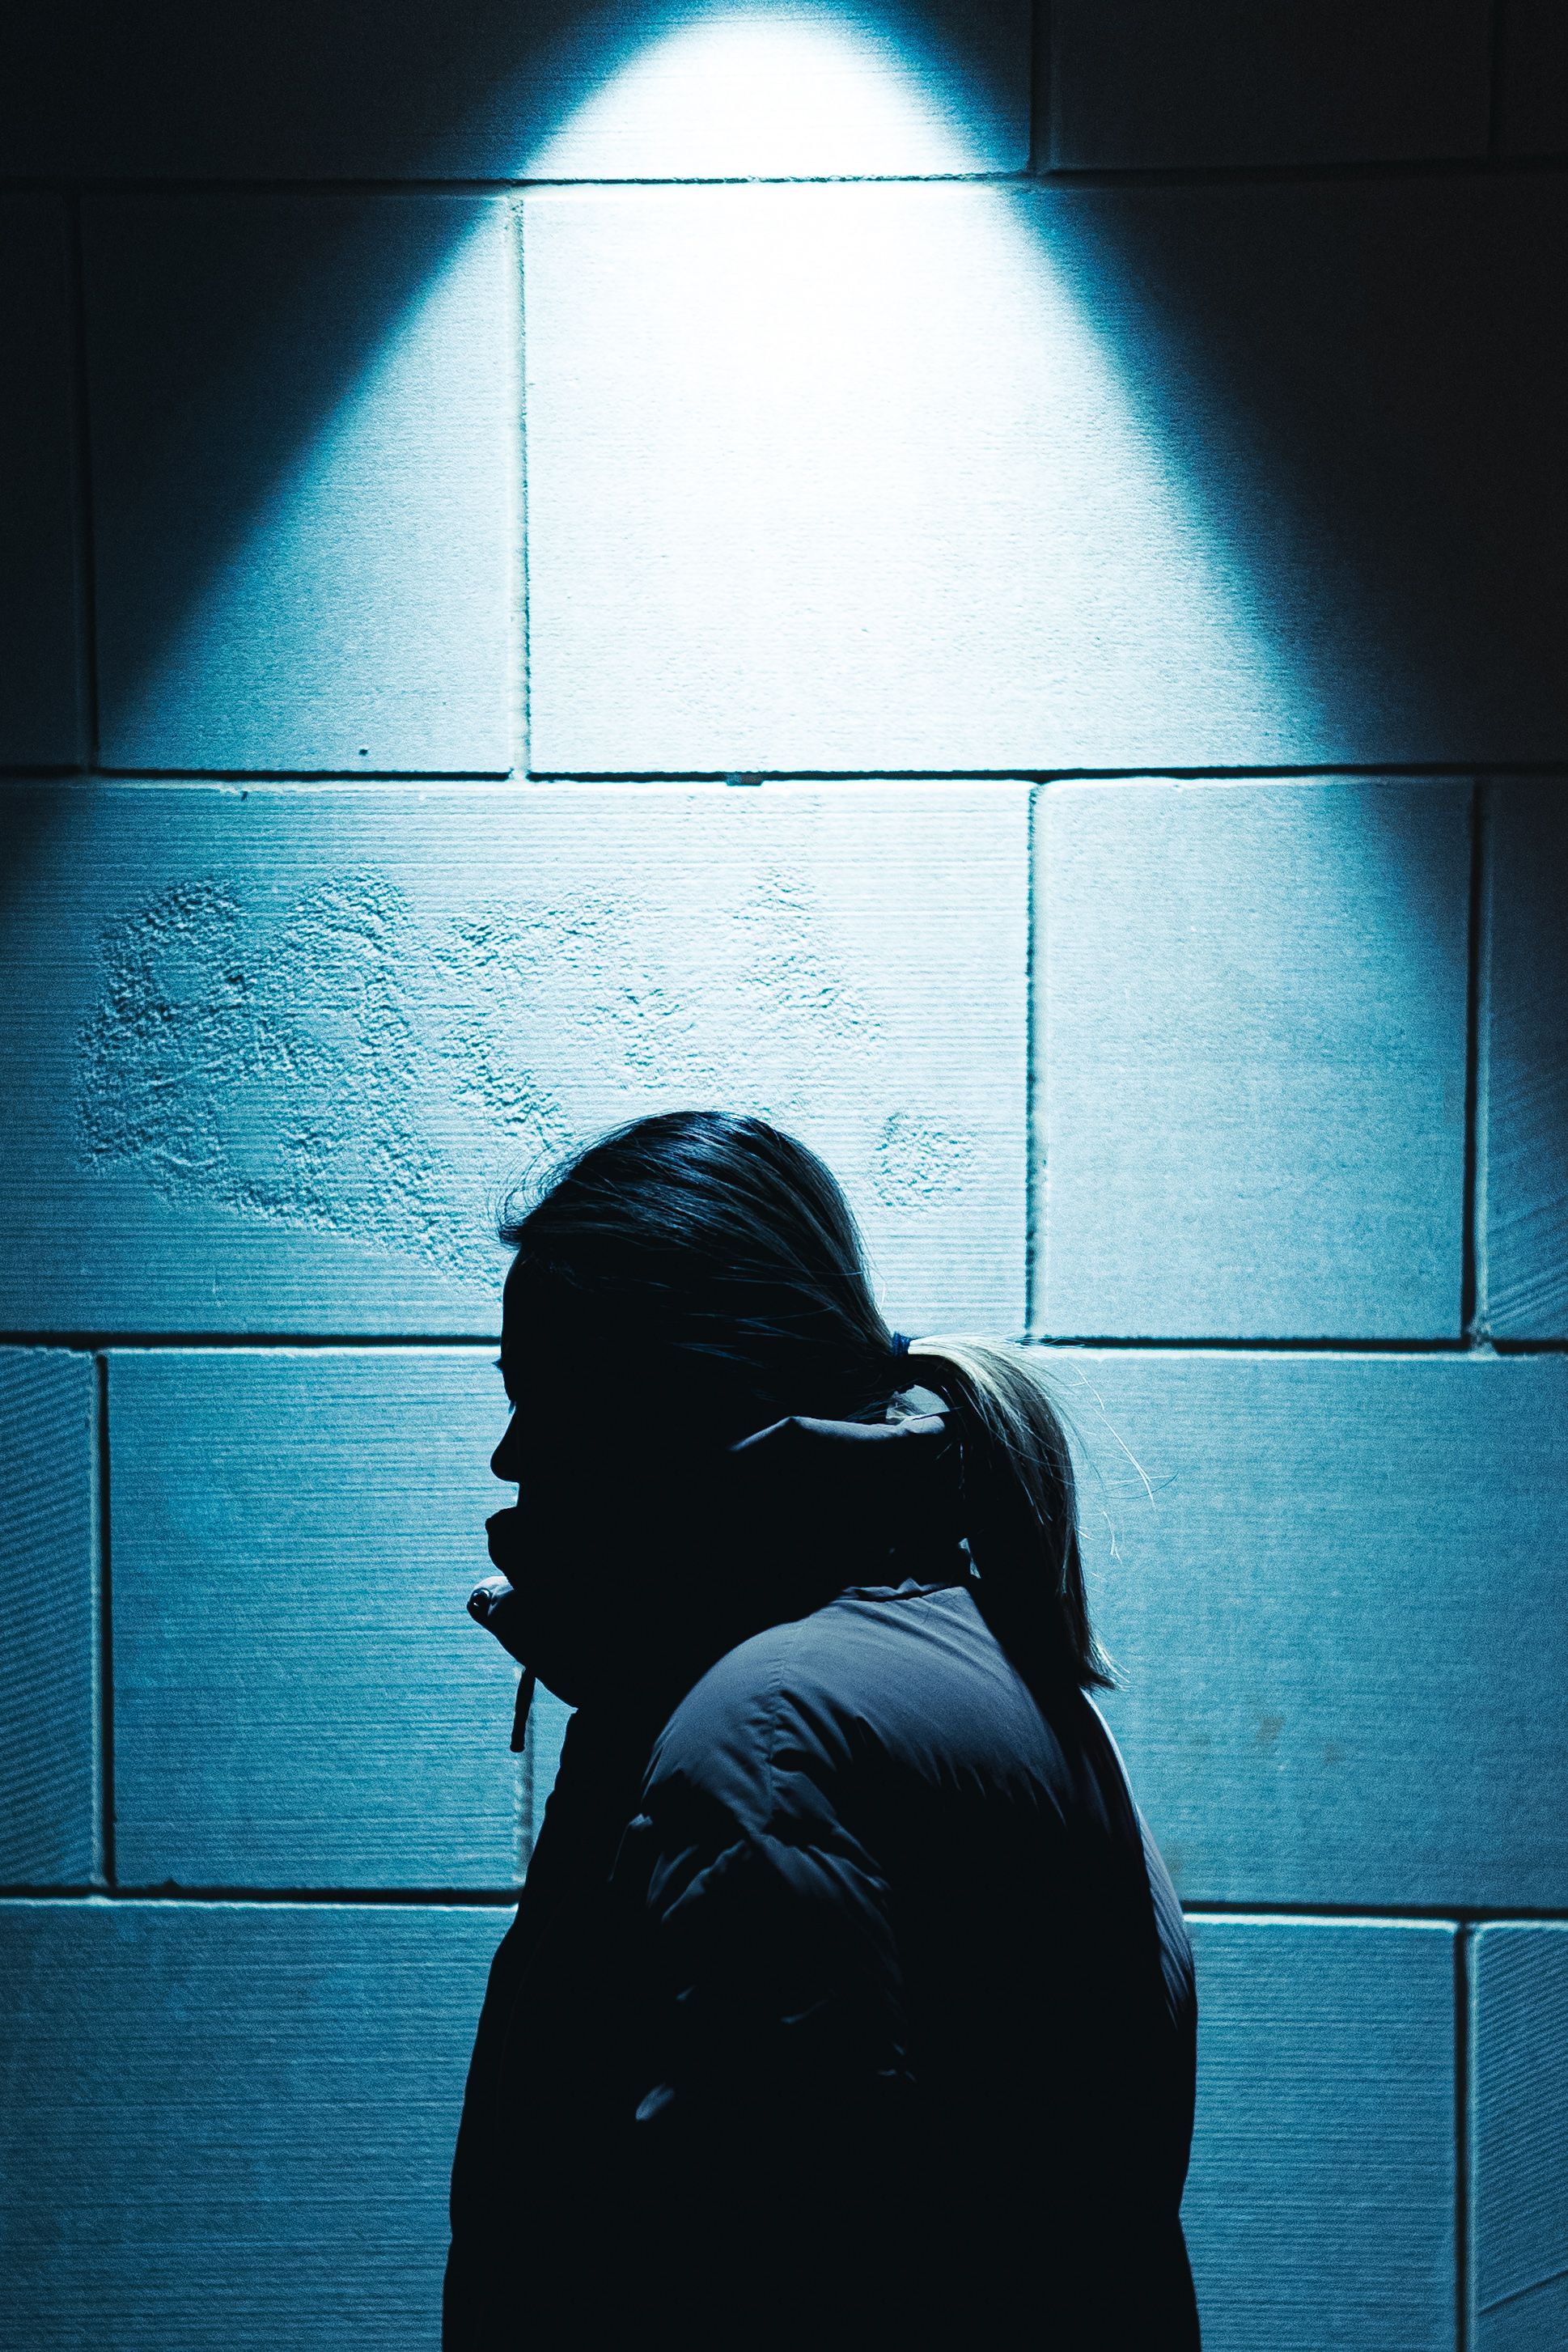 A pedestrian in silhouette under a streetlight at night